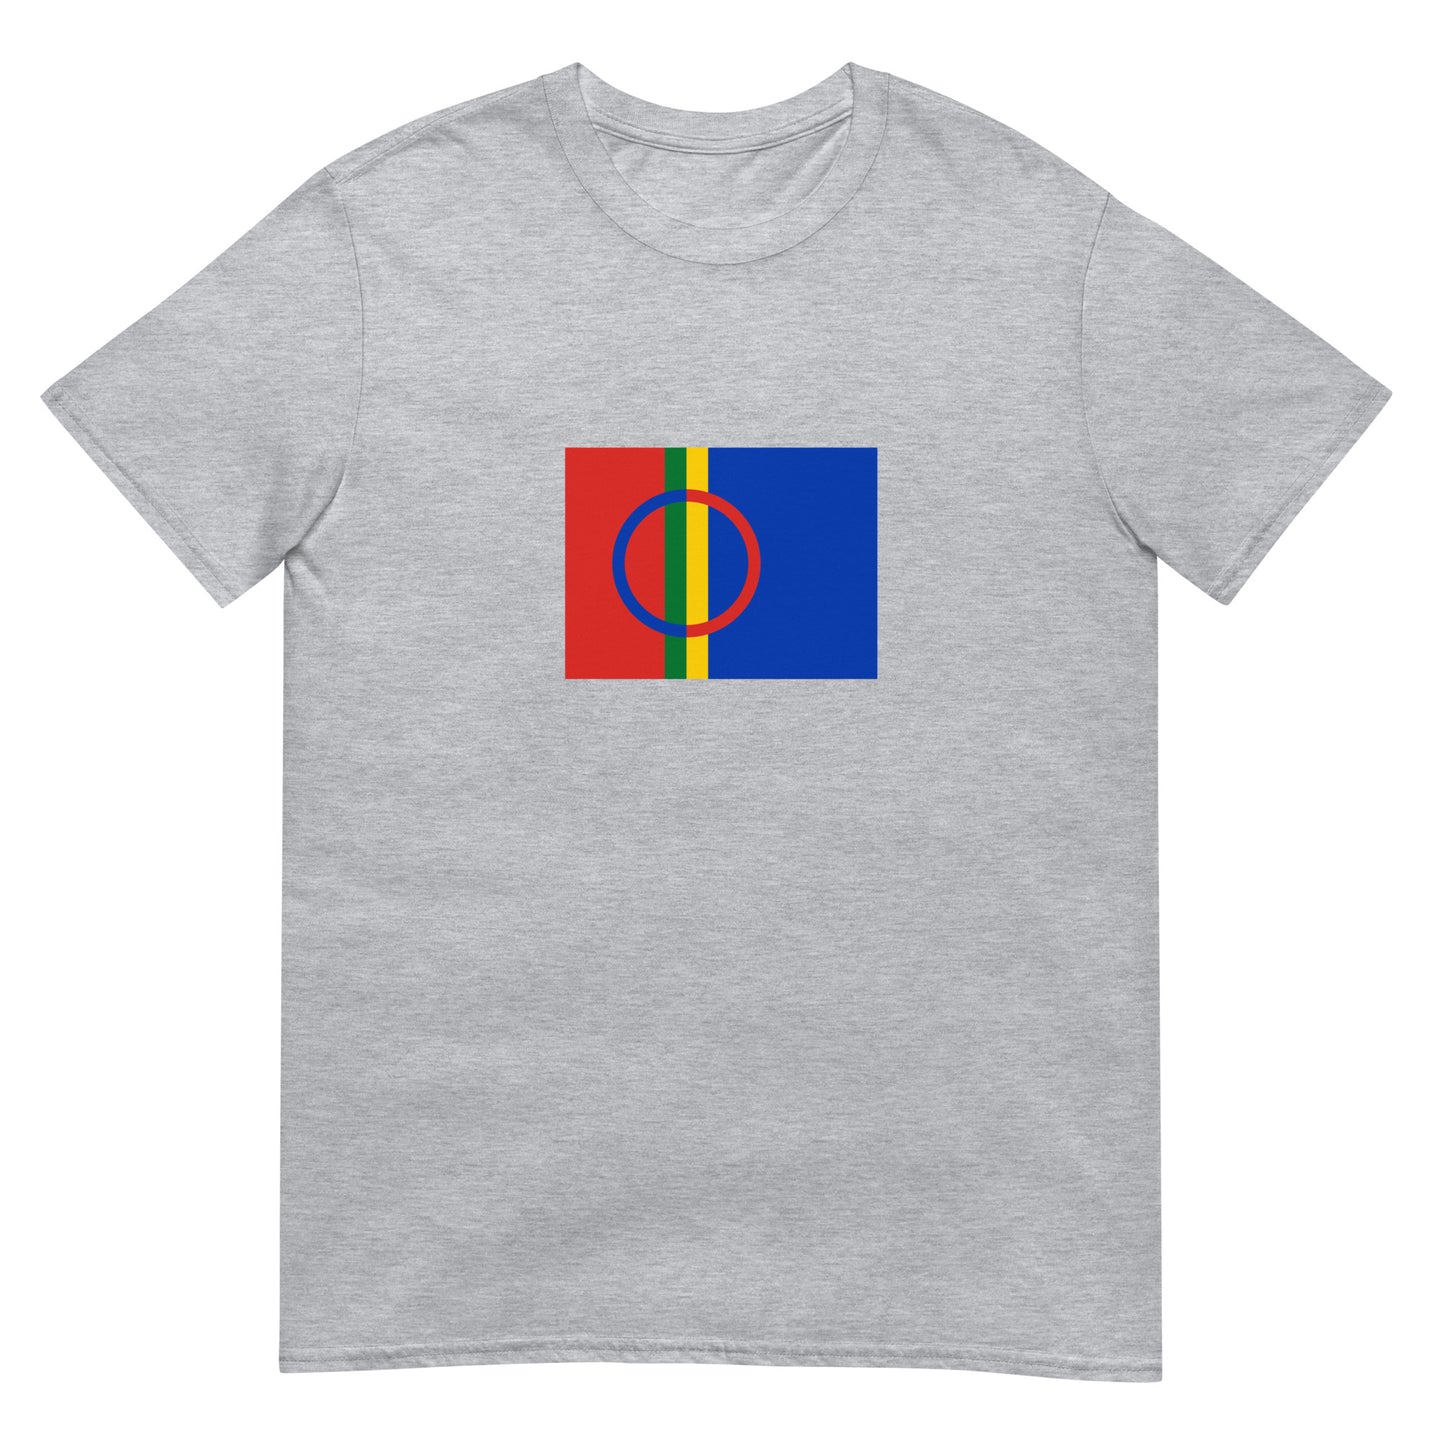 Finland - Sami people | Ethnic Flag Short-Sleeve Unisex T-Shirt